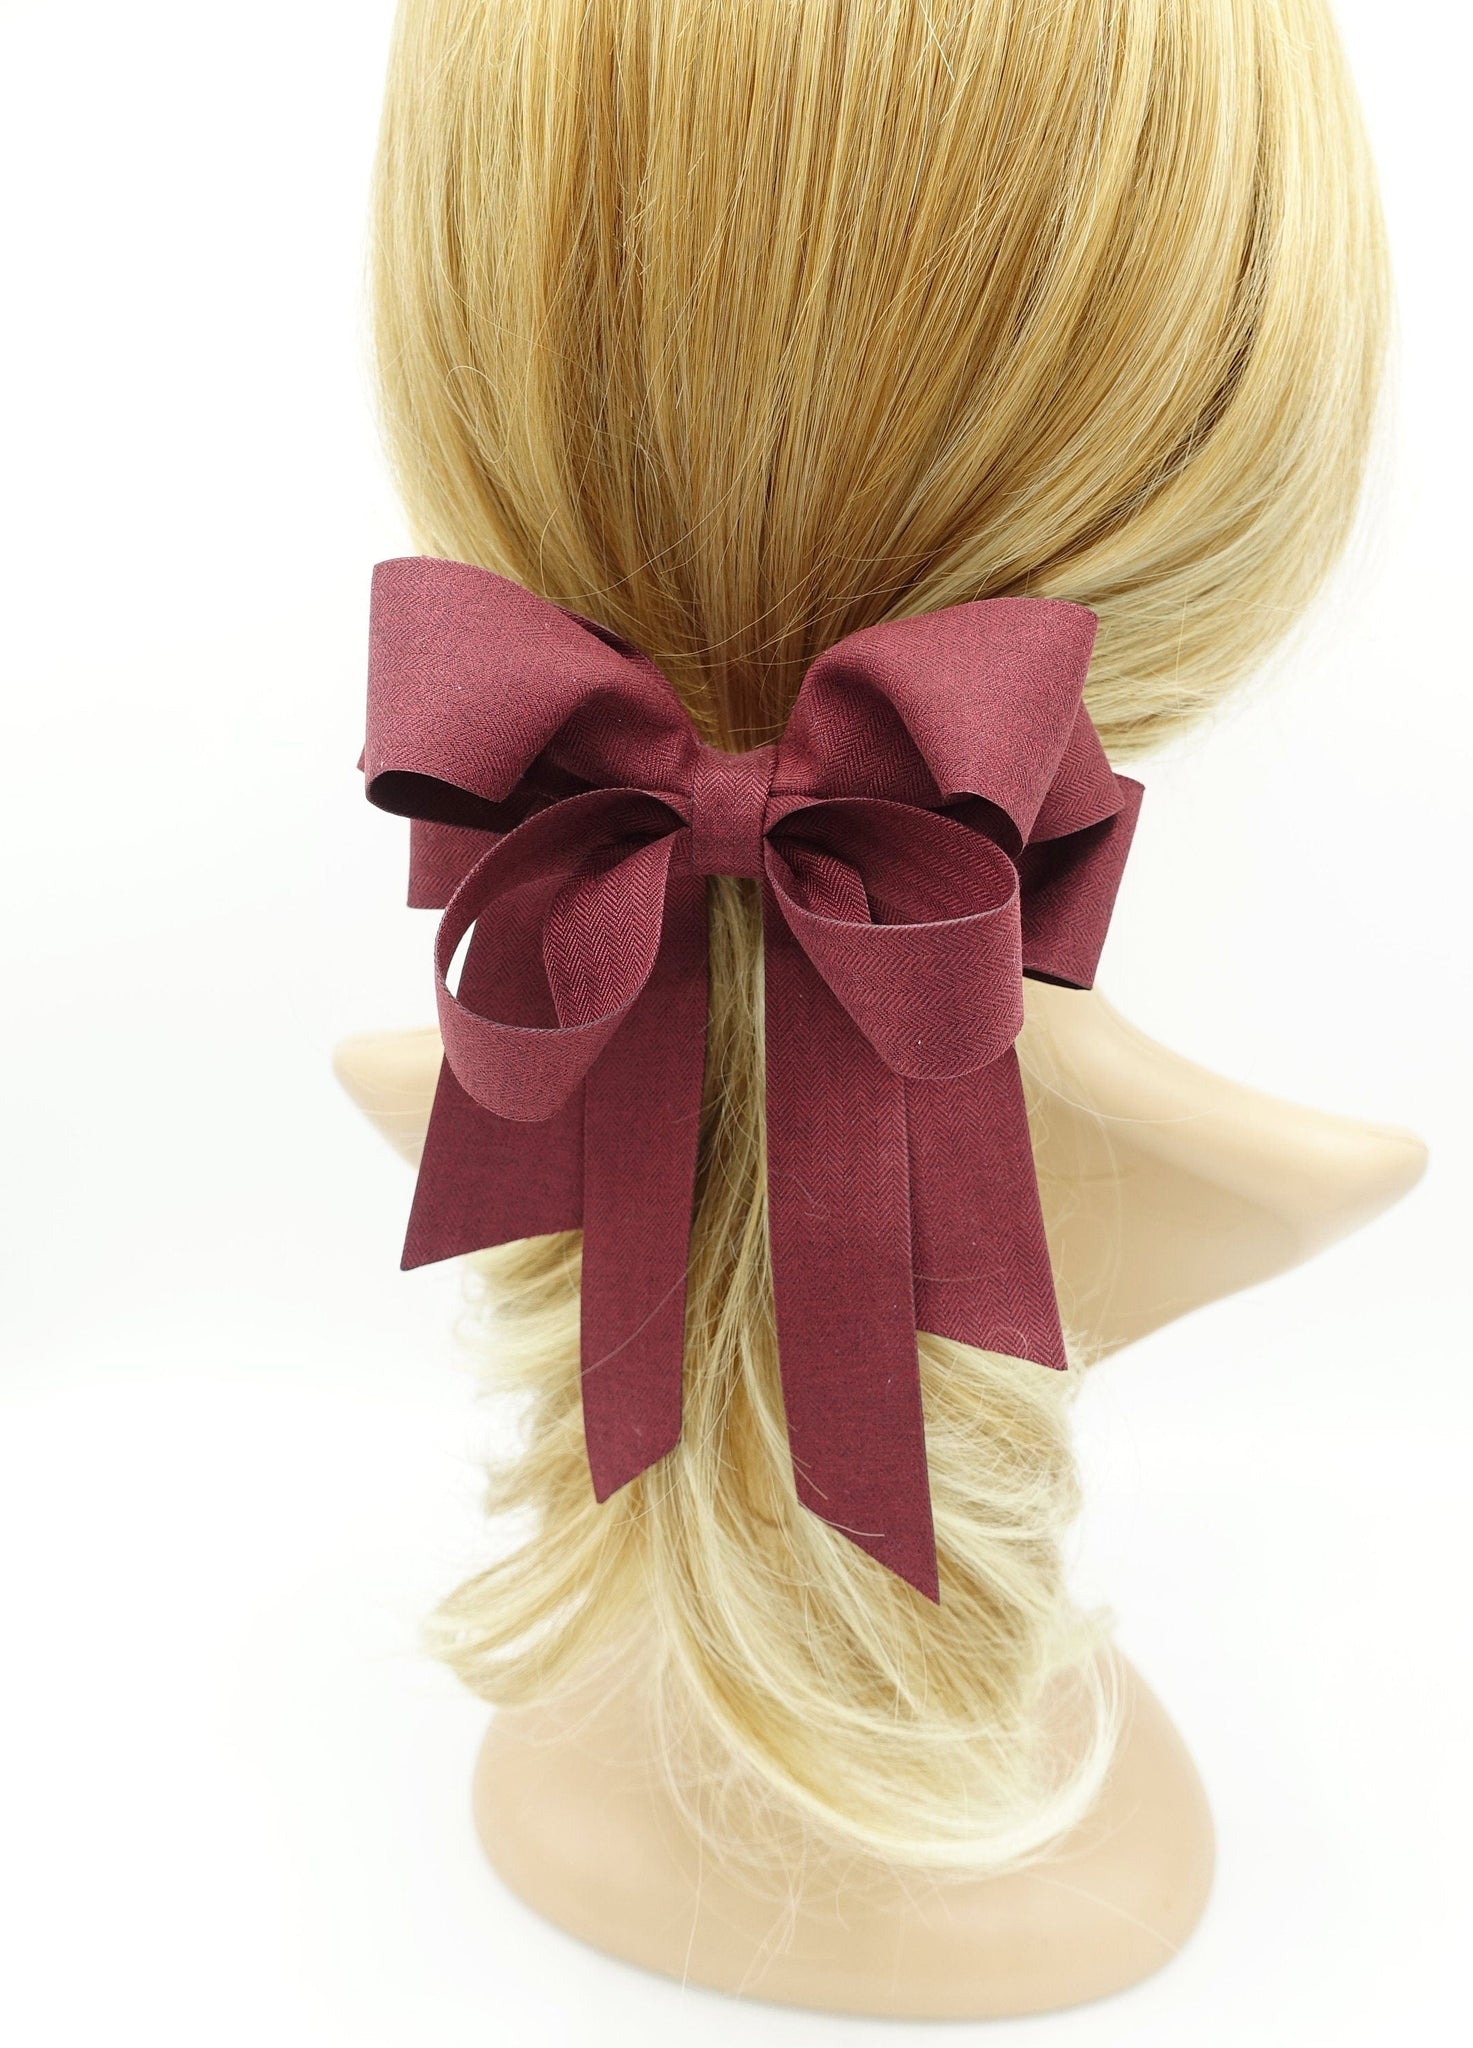 veryshine.com Barrette (Bow) Red wine herringbone multi wing hair bow hair accessory for women